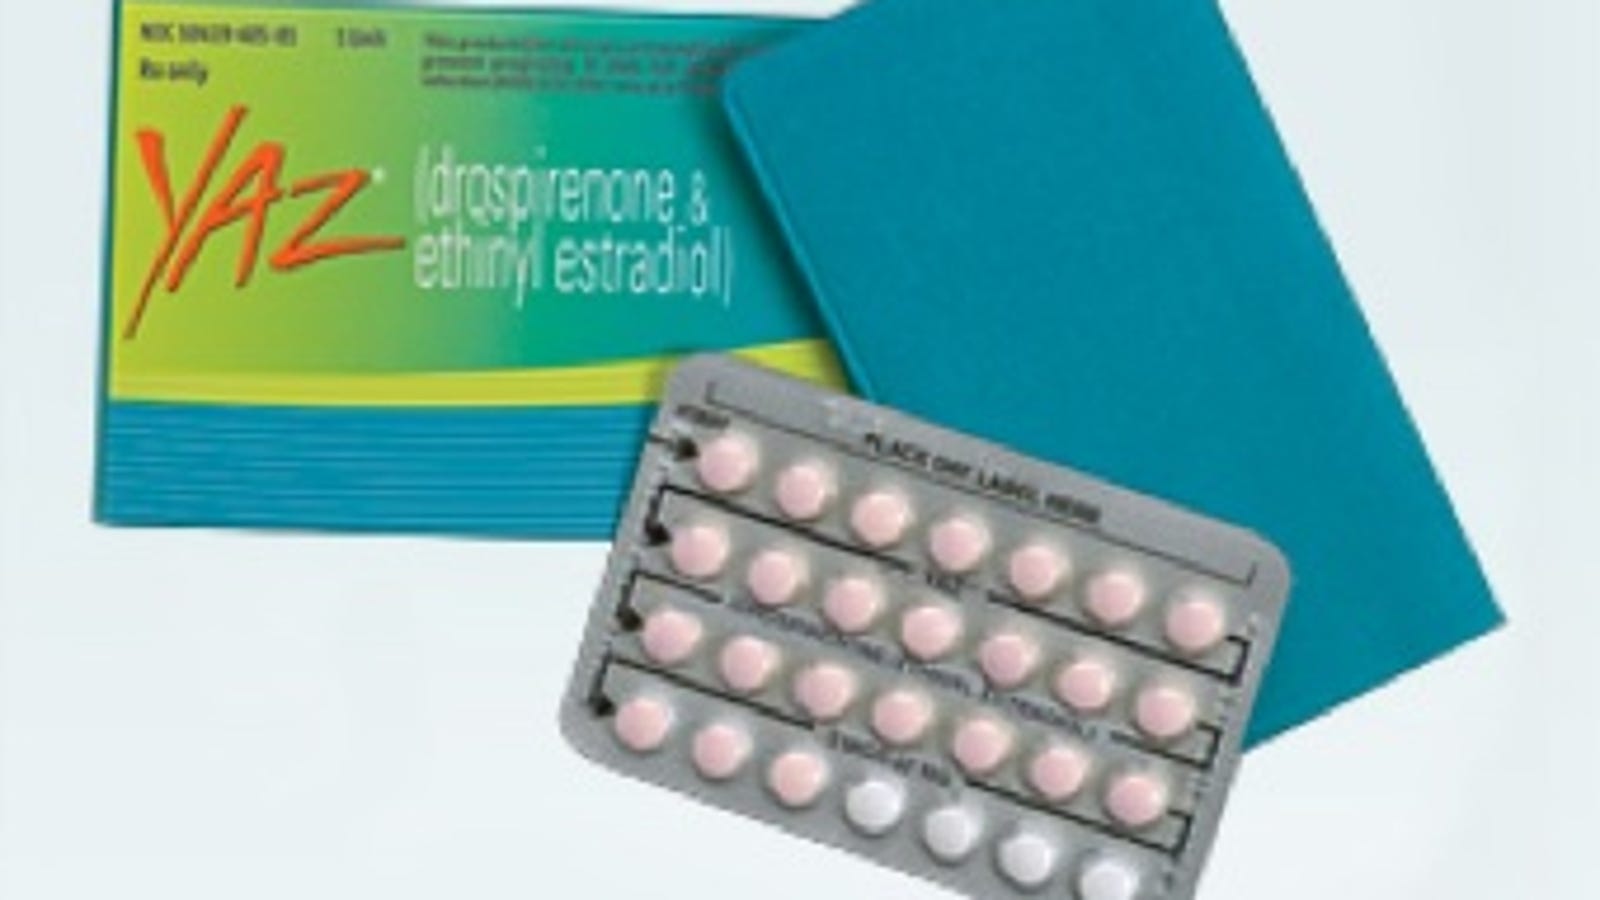 Is Yaz Riskier Than Other Birth Control Pills?